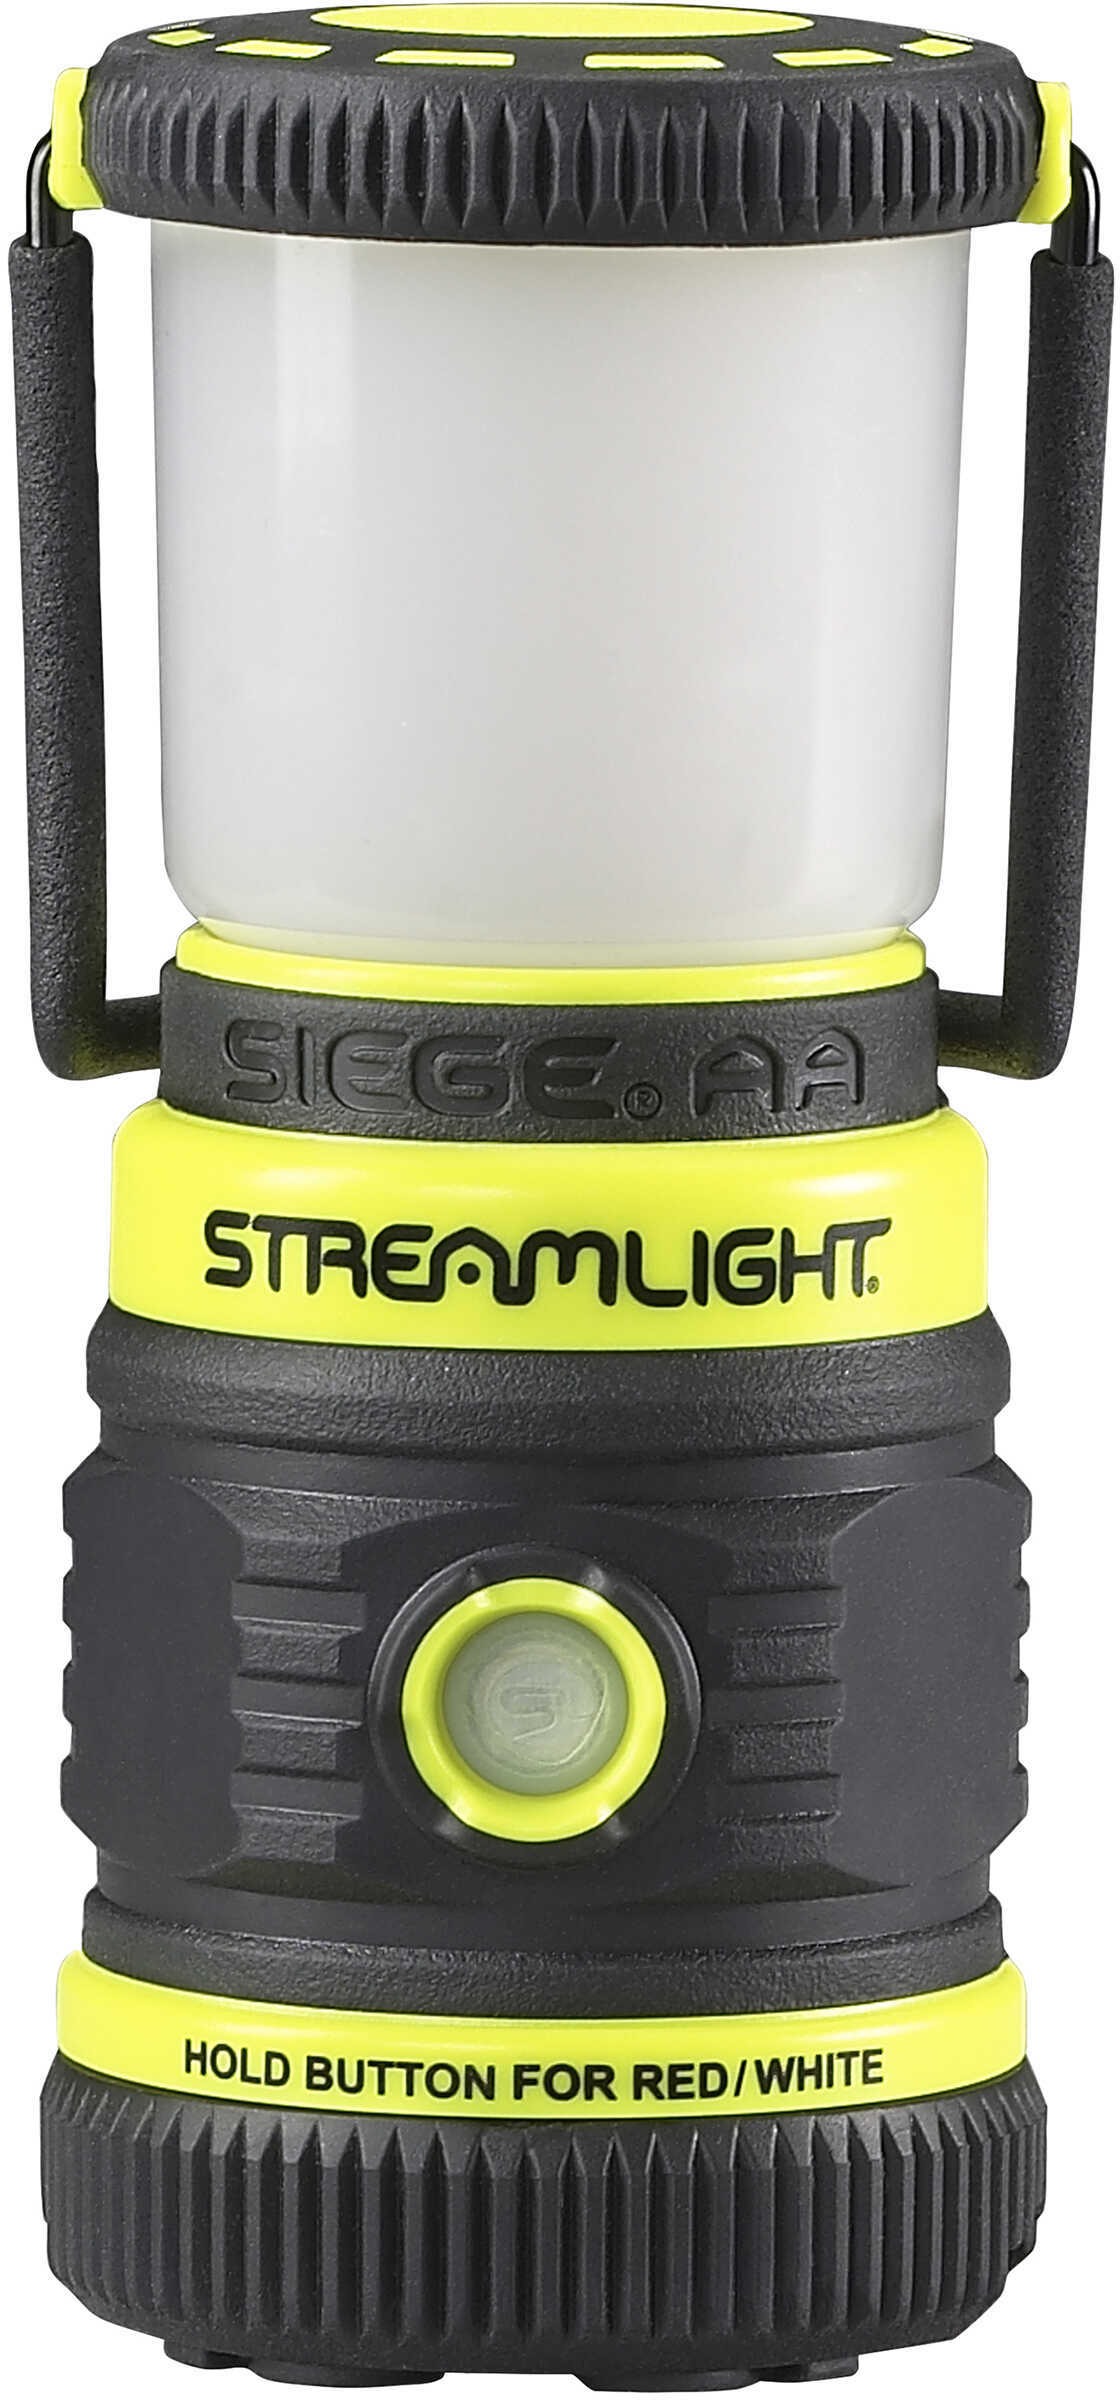 Siege AA Lantern w/Magnetic Base Yellow Md: 44943-img-1